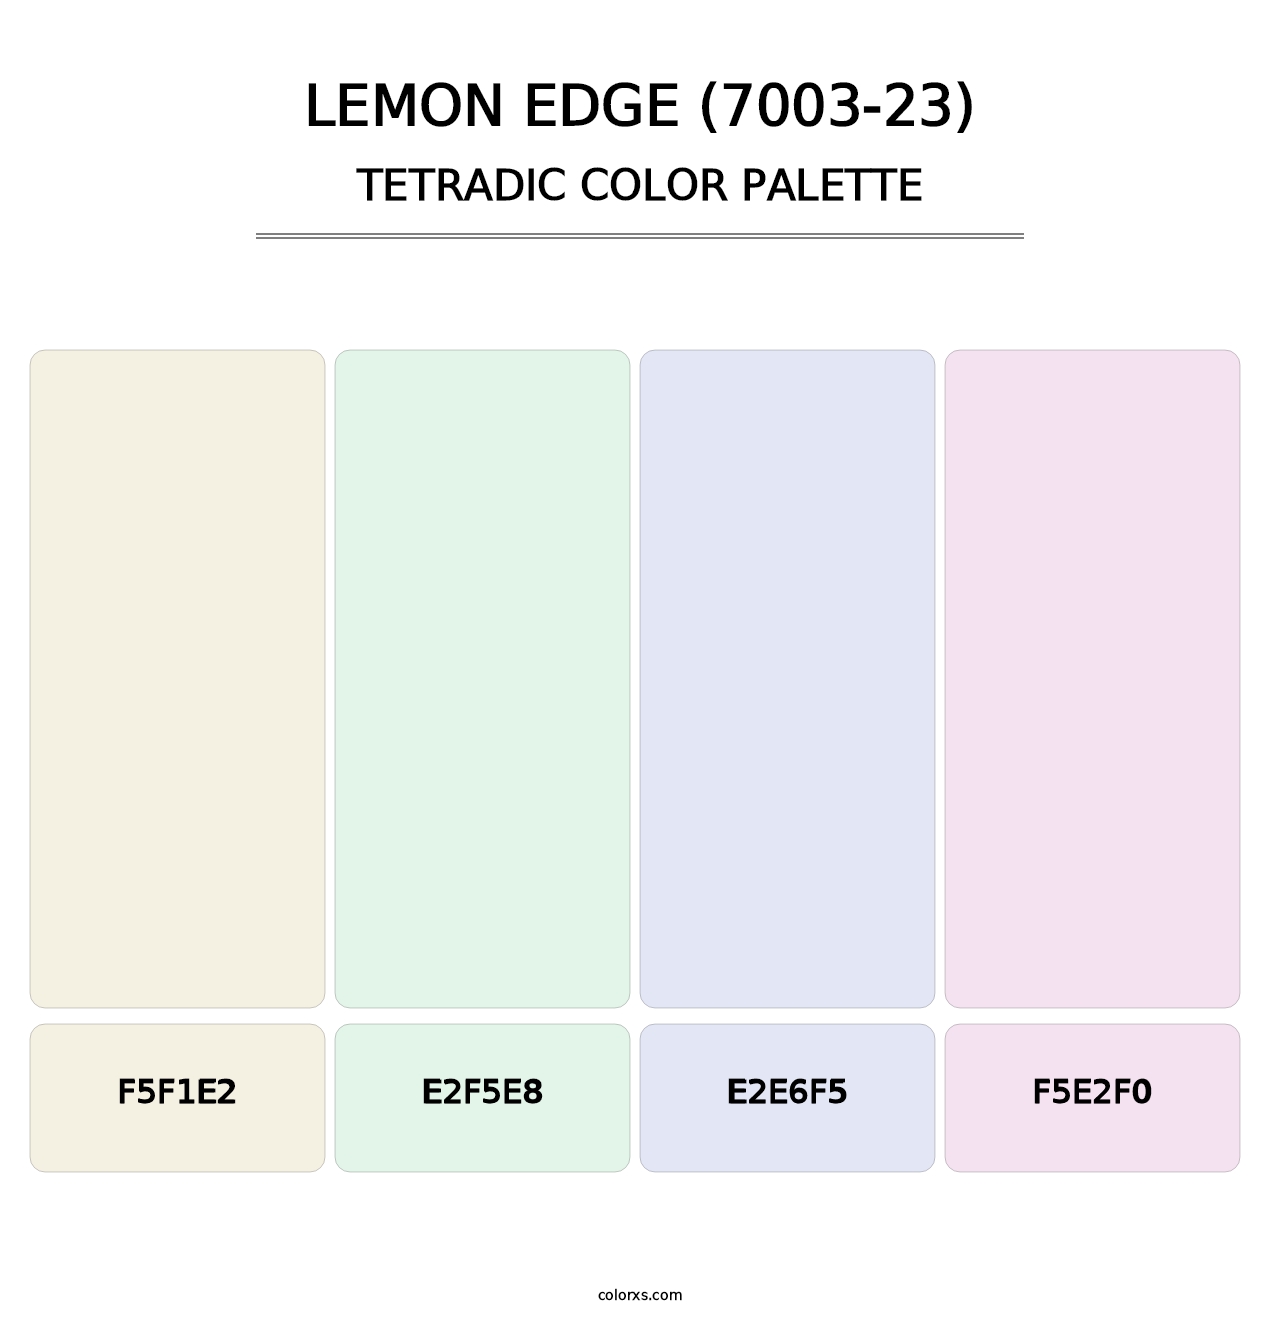 Lemon Edge (7003-23) - Tetradic Color Palette